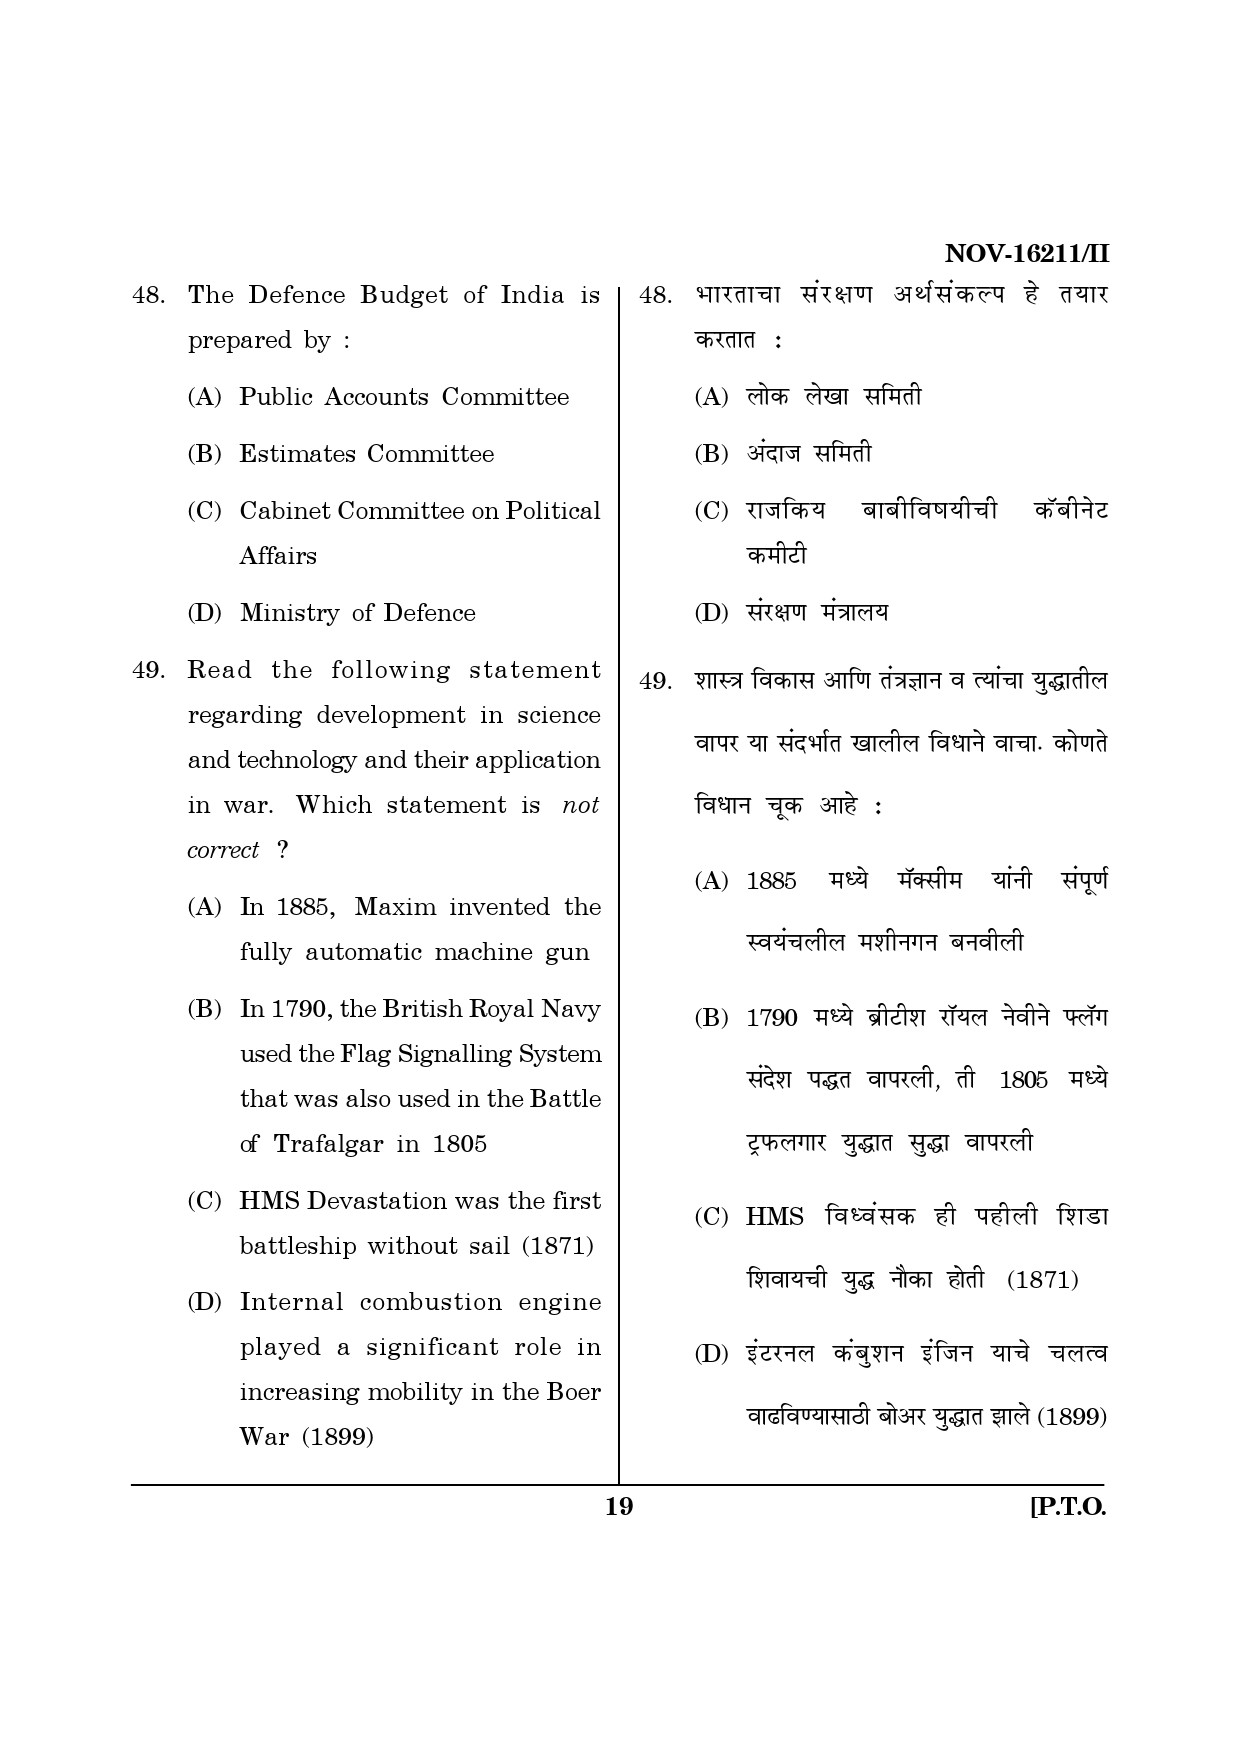 Maharashtra SET Defence and Strategic Studies Question Paper II November 2011 19